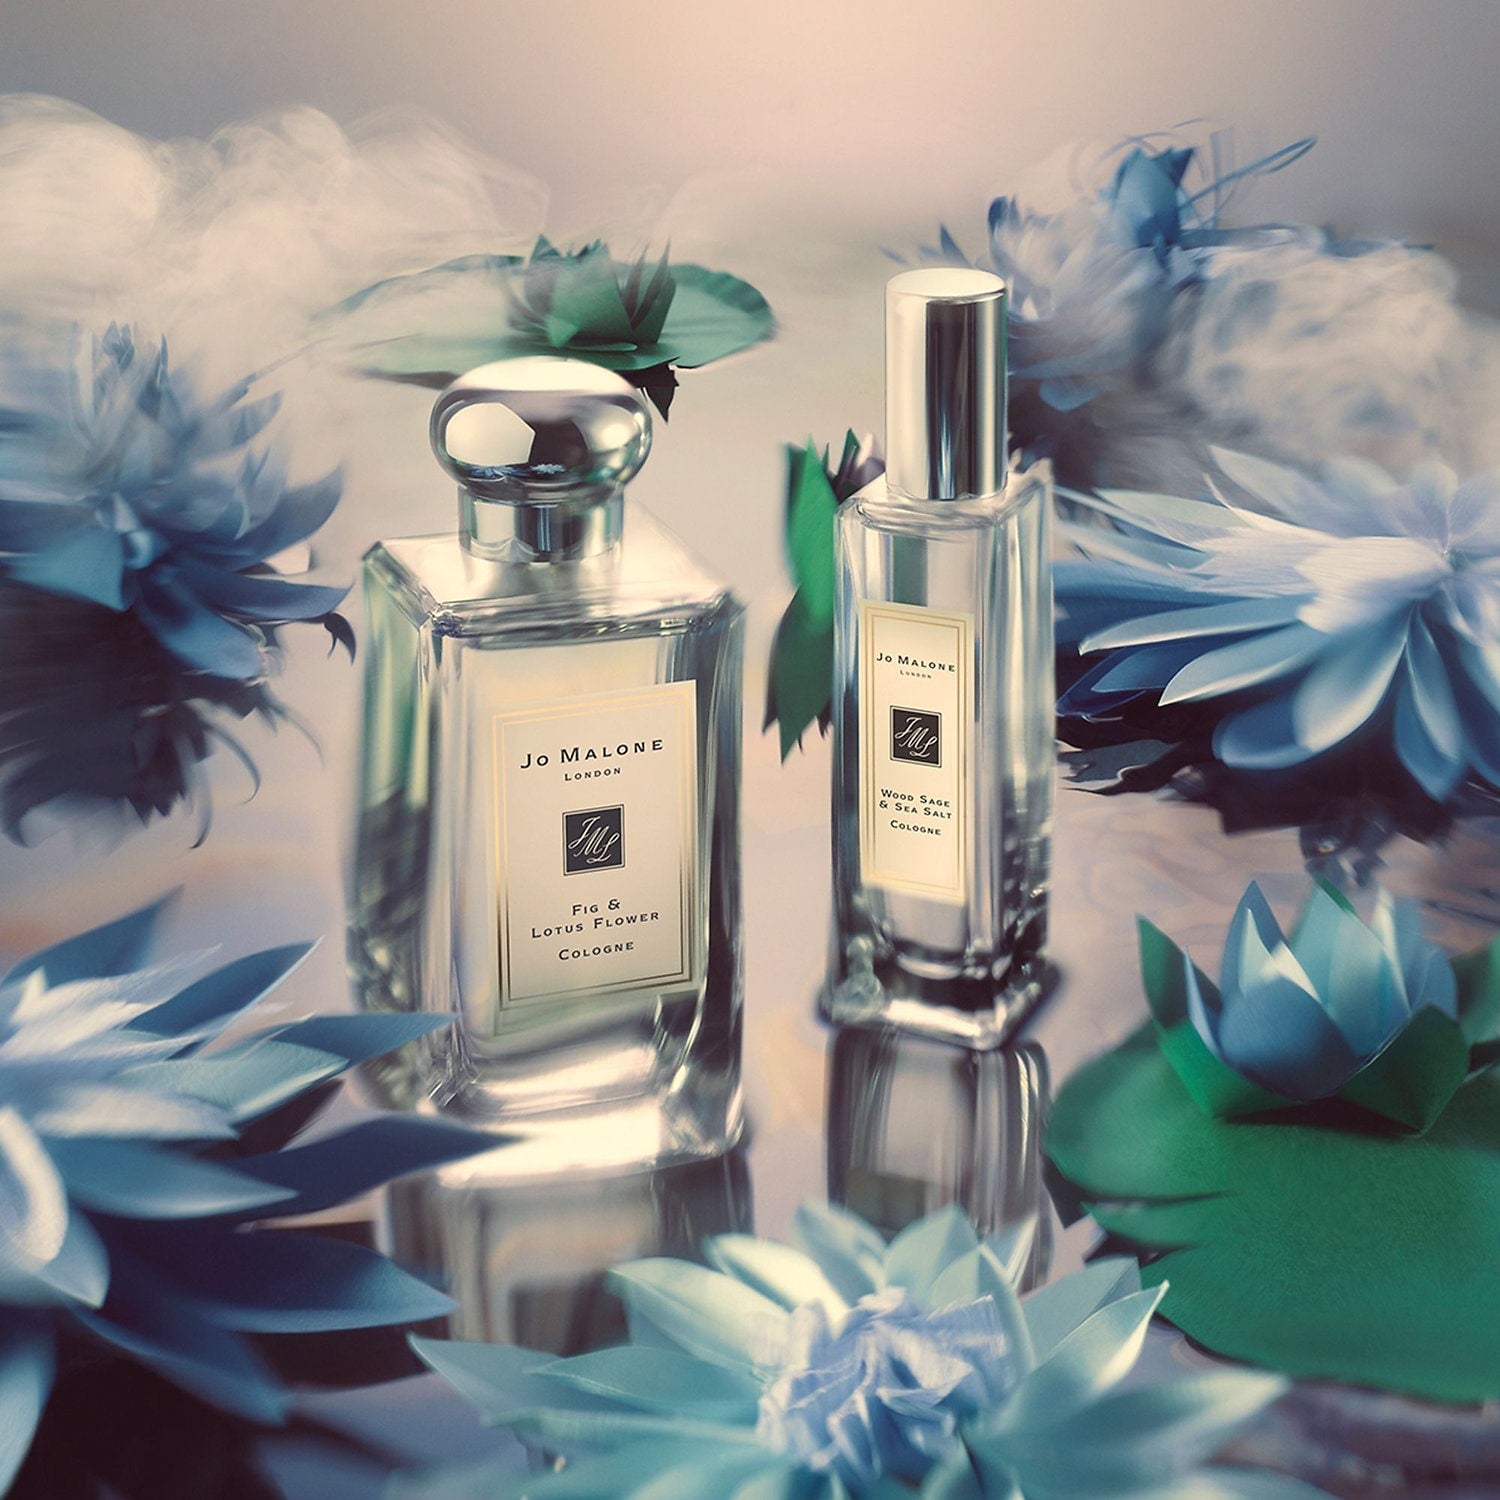 Jo Malone Fig & Lotus Flower EDC | My Perfume Shop Australia